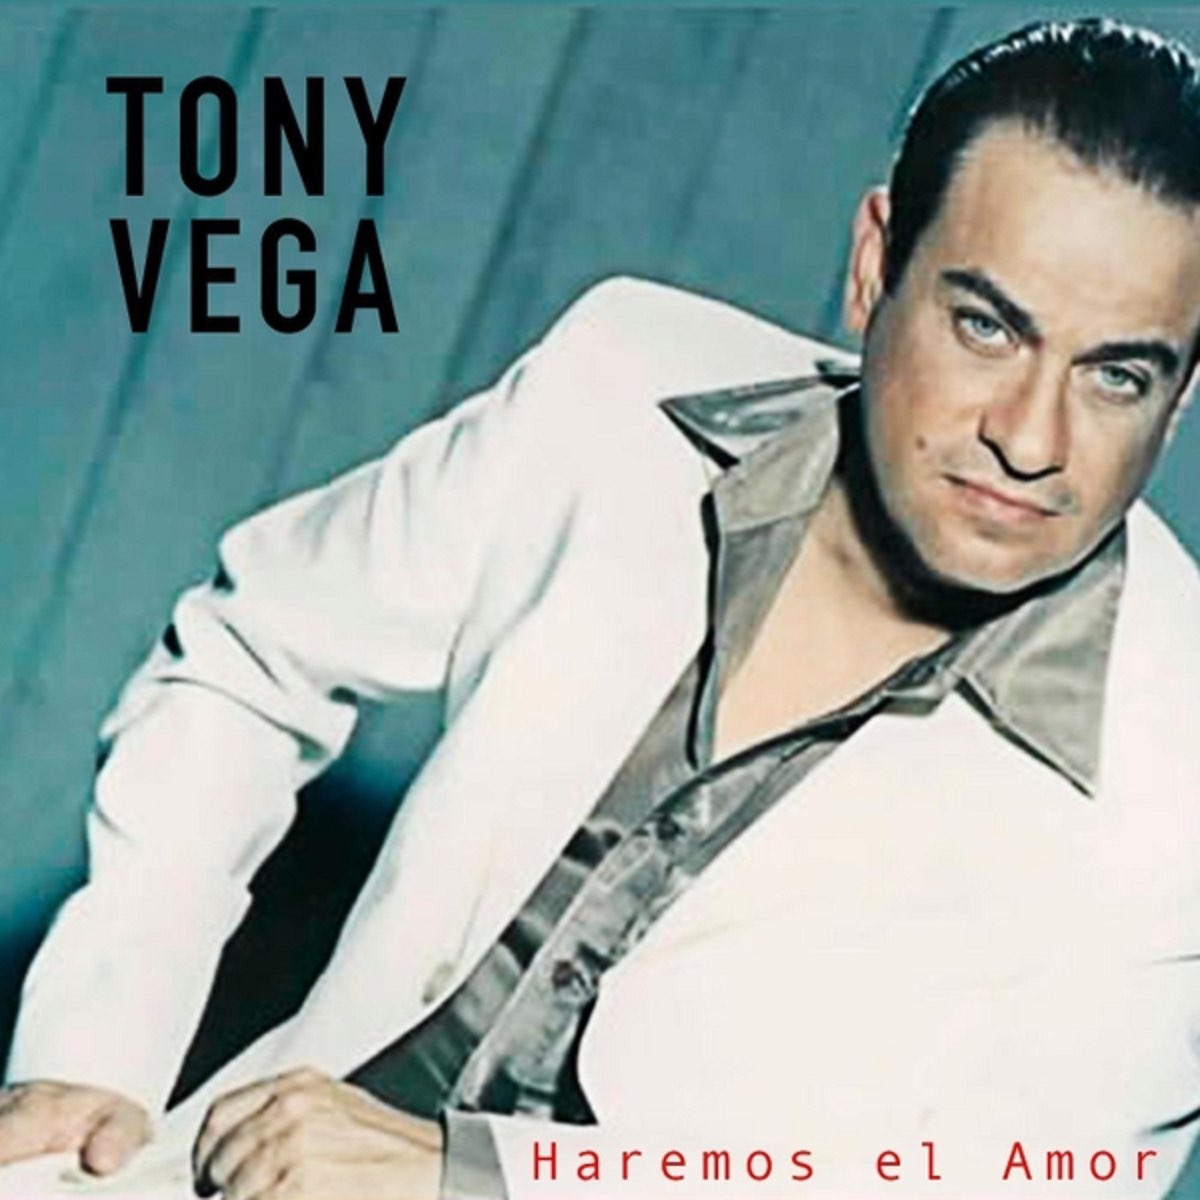 Haremos el Amor - Single de Tony Vega en Apple Music